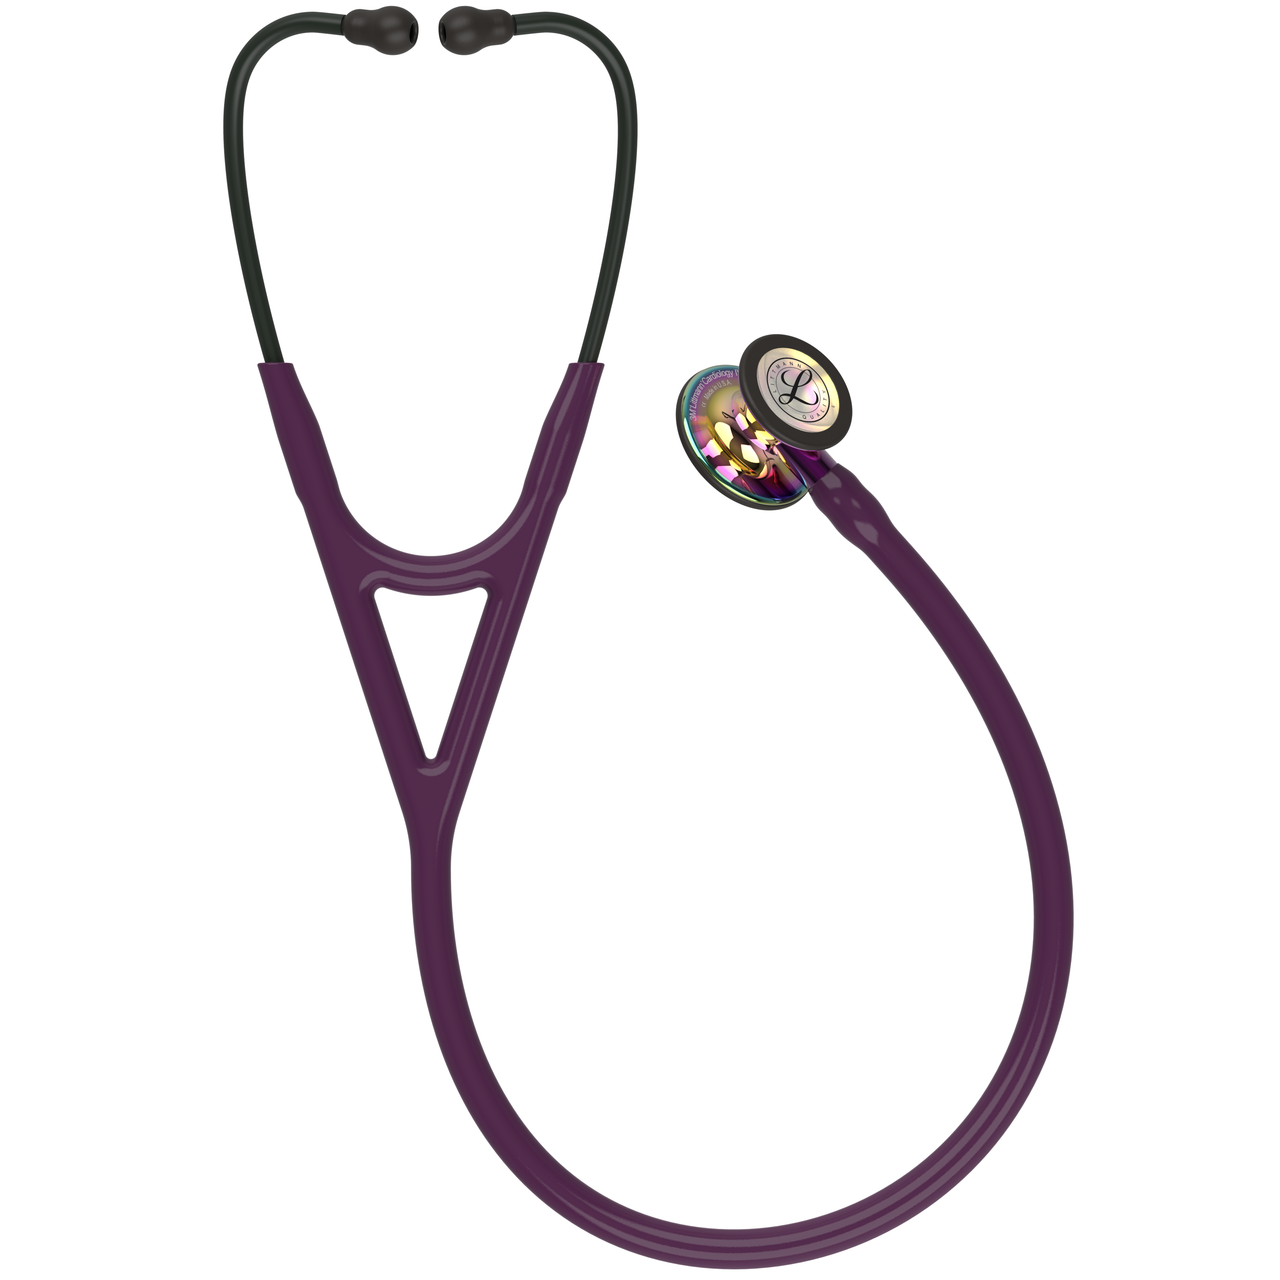 Littmann Cardiology IV Stethoscope, Rainbow Plum Violet, 6239